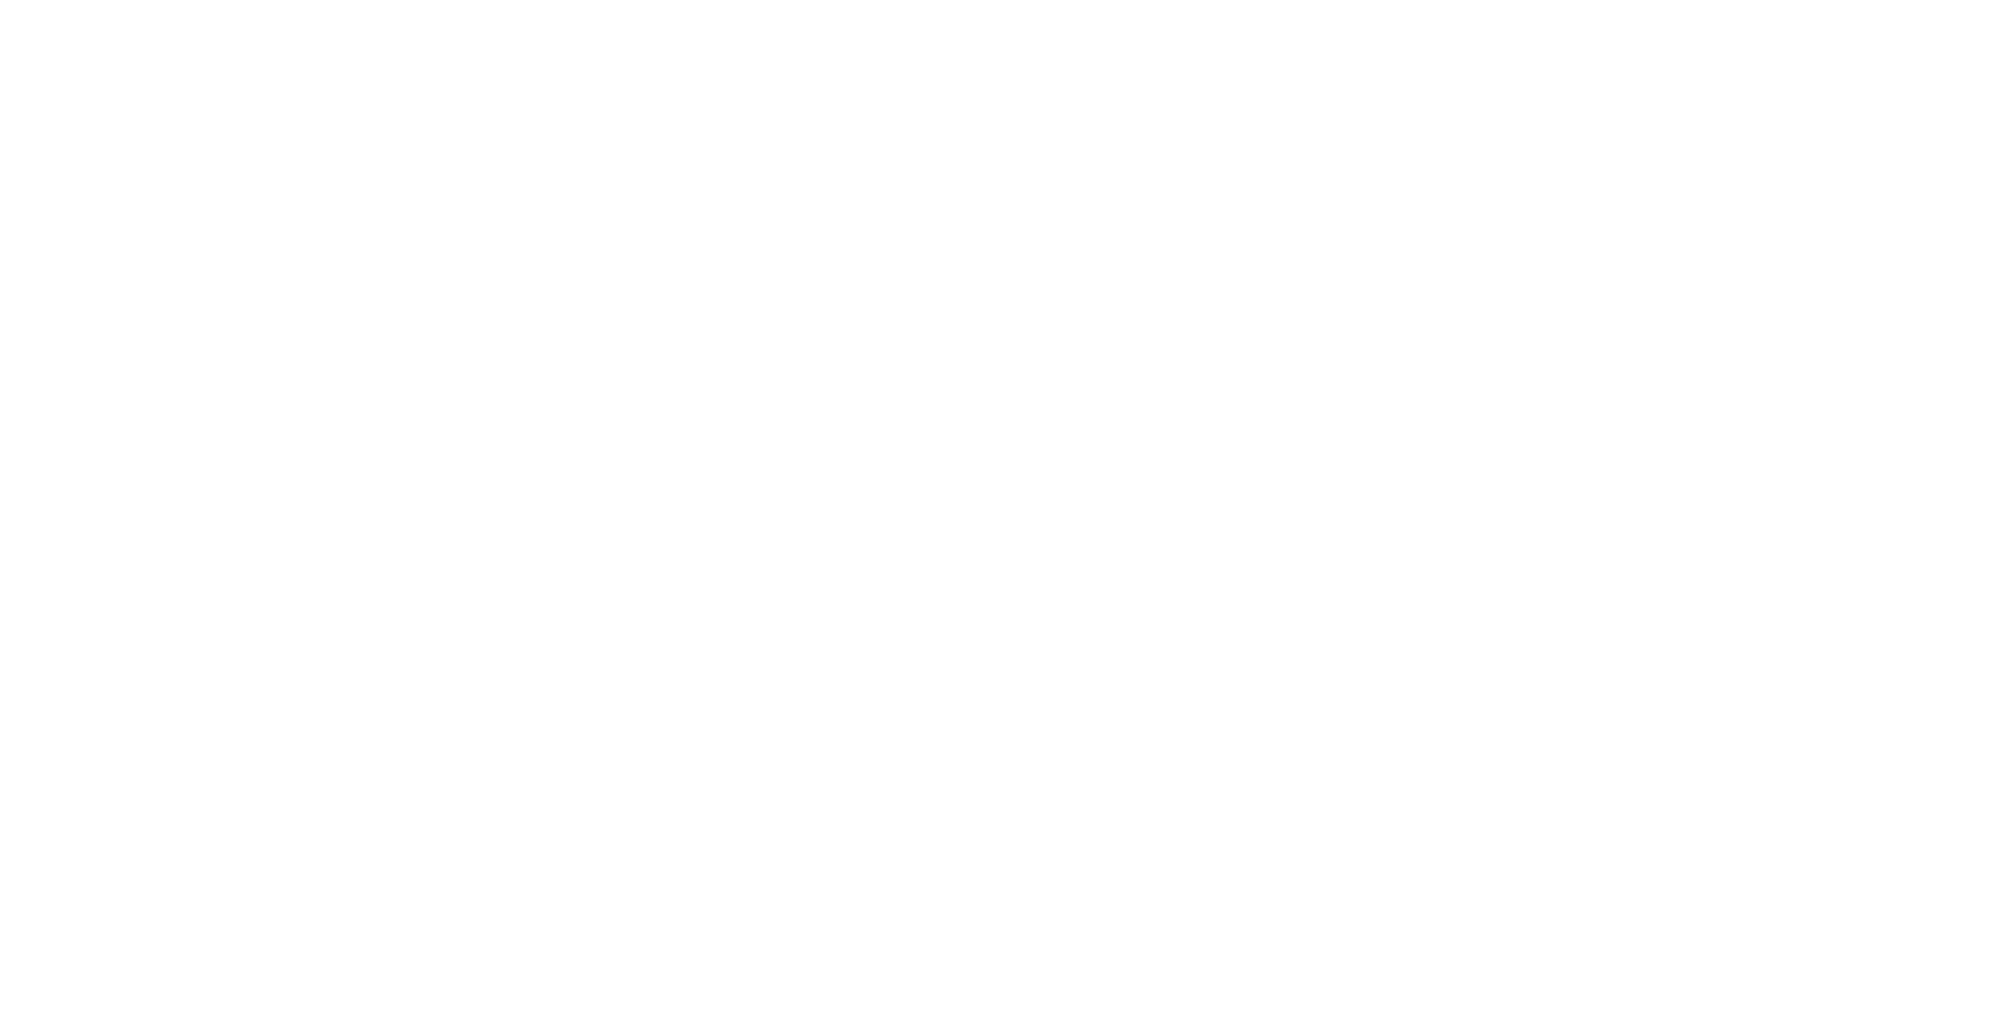 VvKR Logo